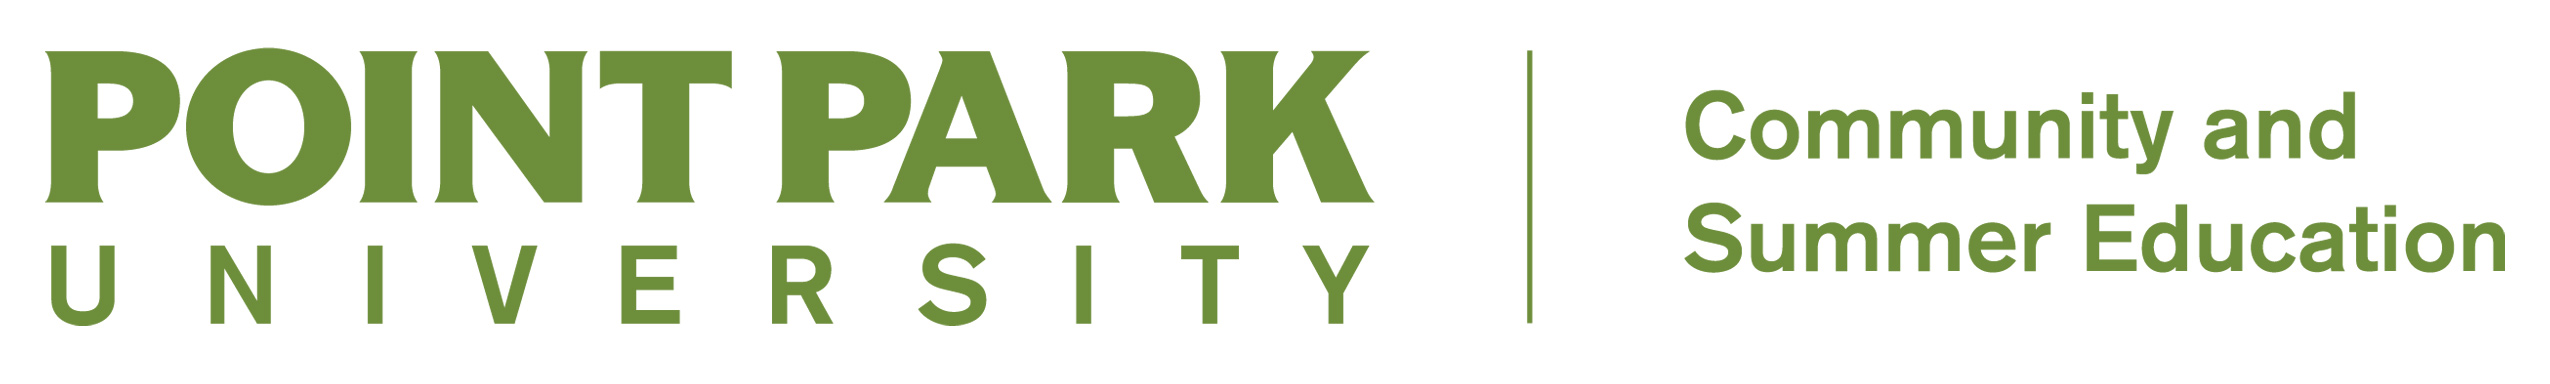 Community-and-Summer-Education-Logo-Horizontal-Green-on-White.jpeg